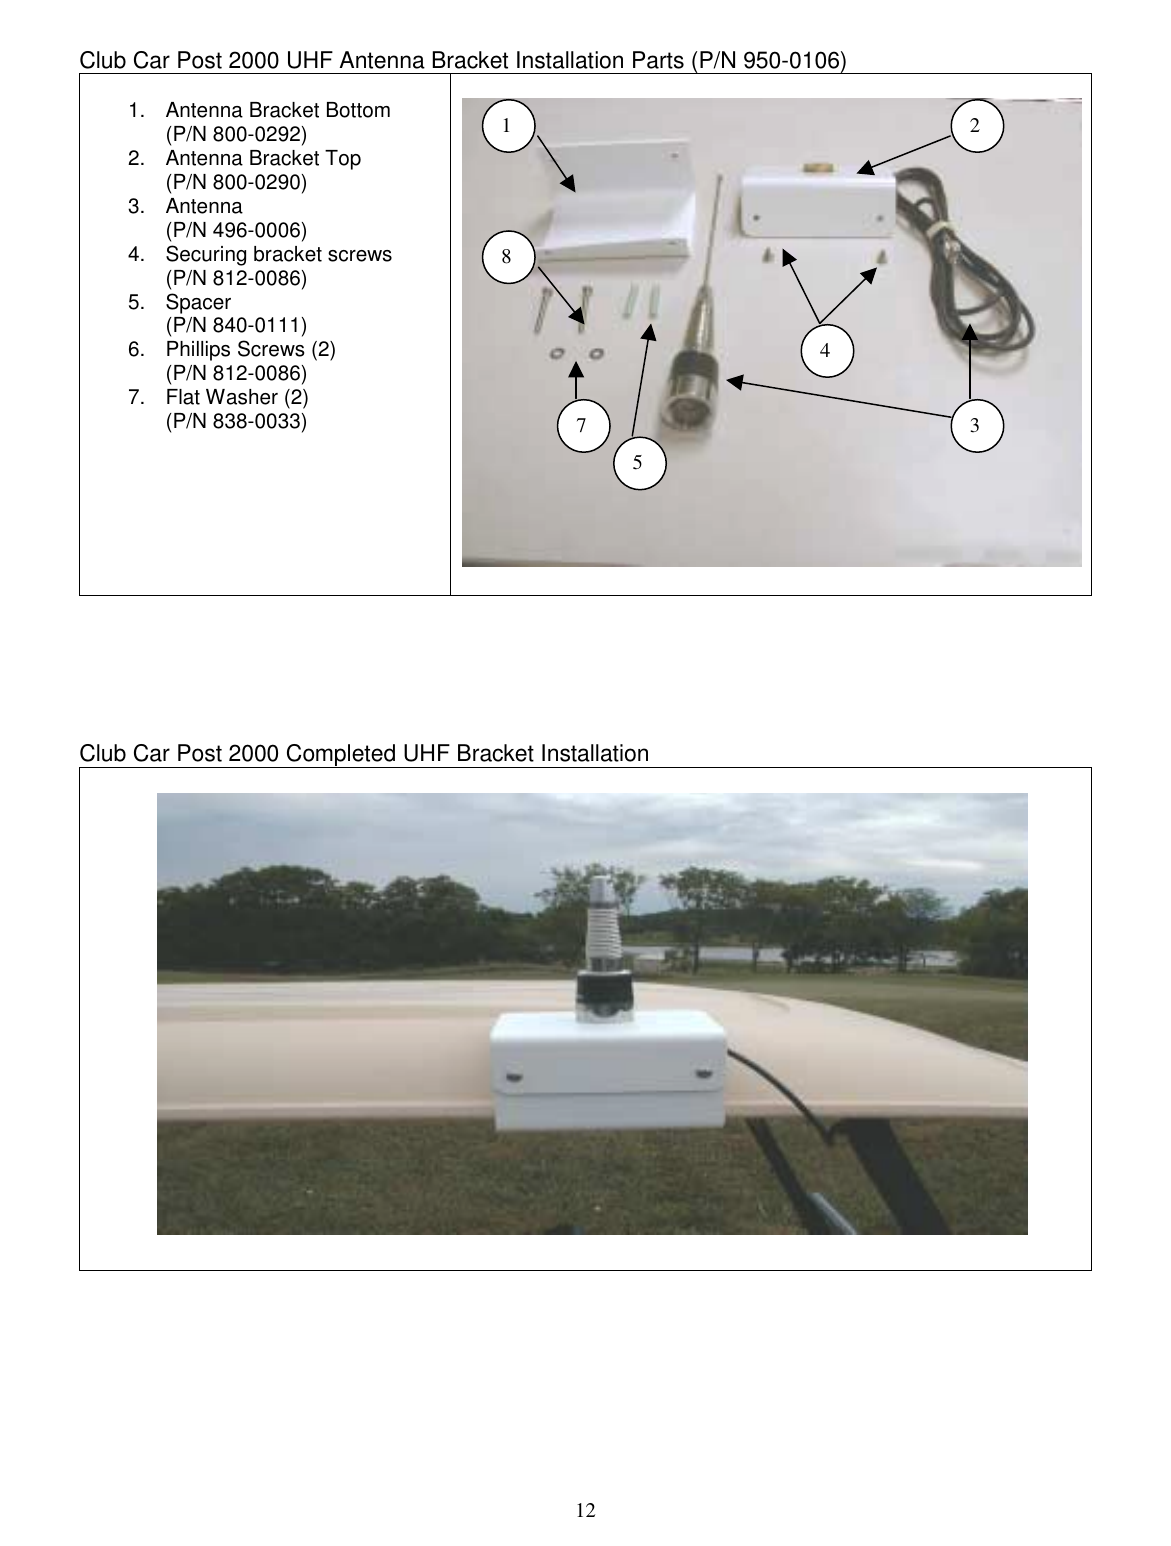  12 Club Car Post 2000 UHF Antenna Bracket Installation Parts (P/N 950-0106)  1.  Antenna Bracket Bottom (P/N 800-0292) 2.  Antenna Bracket Top (P/N 800-0290) 3. Antenna (P/N 496-0006) 4.  Securing bracket screws (P/N 812-0086) 5. Spacer (P/N 840-0111) 6. Phillips Screws (2) (P/N 812-0086) 7. Flat Washer (2) (P/N 838-0033)            Club Car Post 2000 Completed UHF Bracket Installation           1 234578